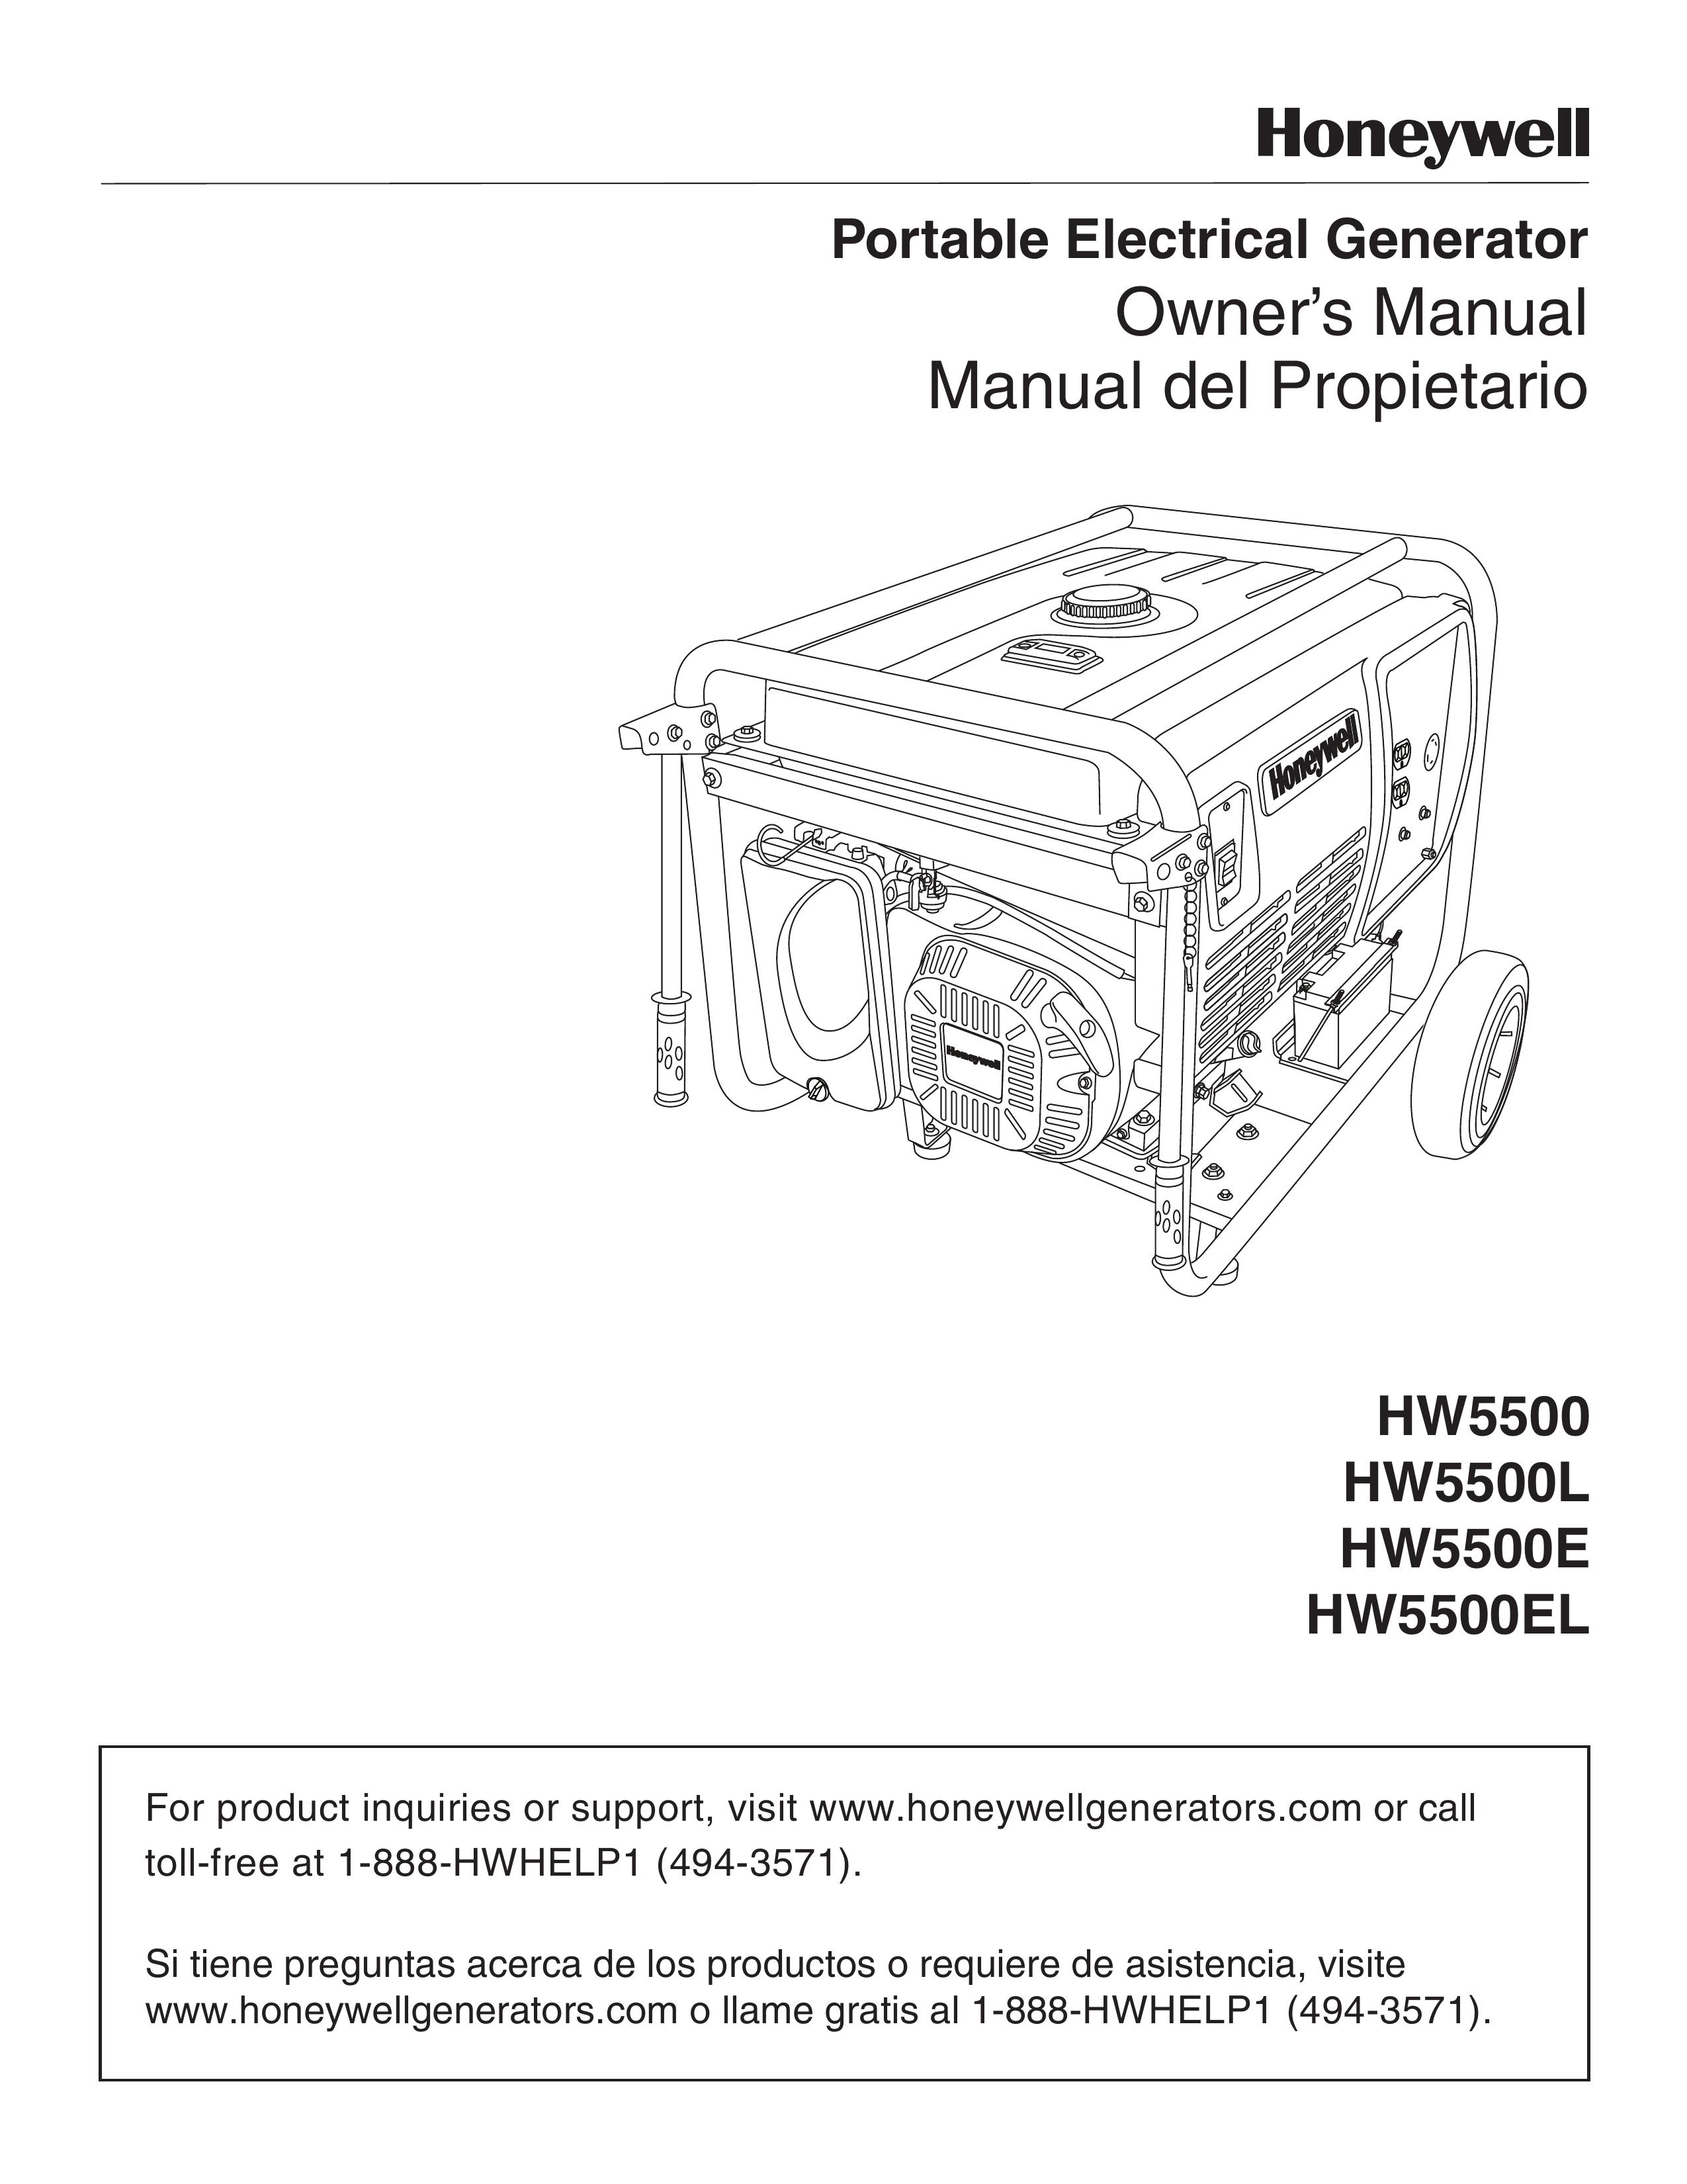 Honeywell HW5500E Portable Generator User Manual